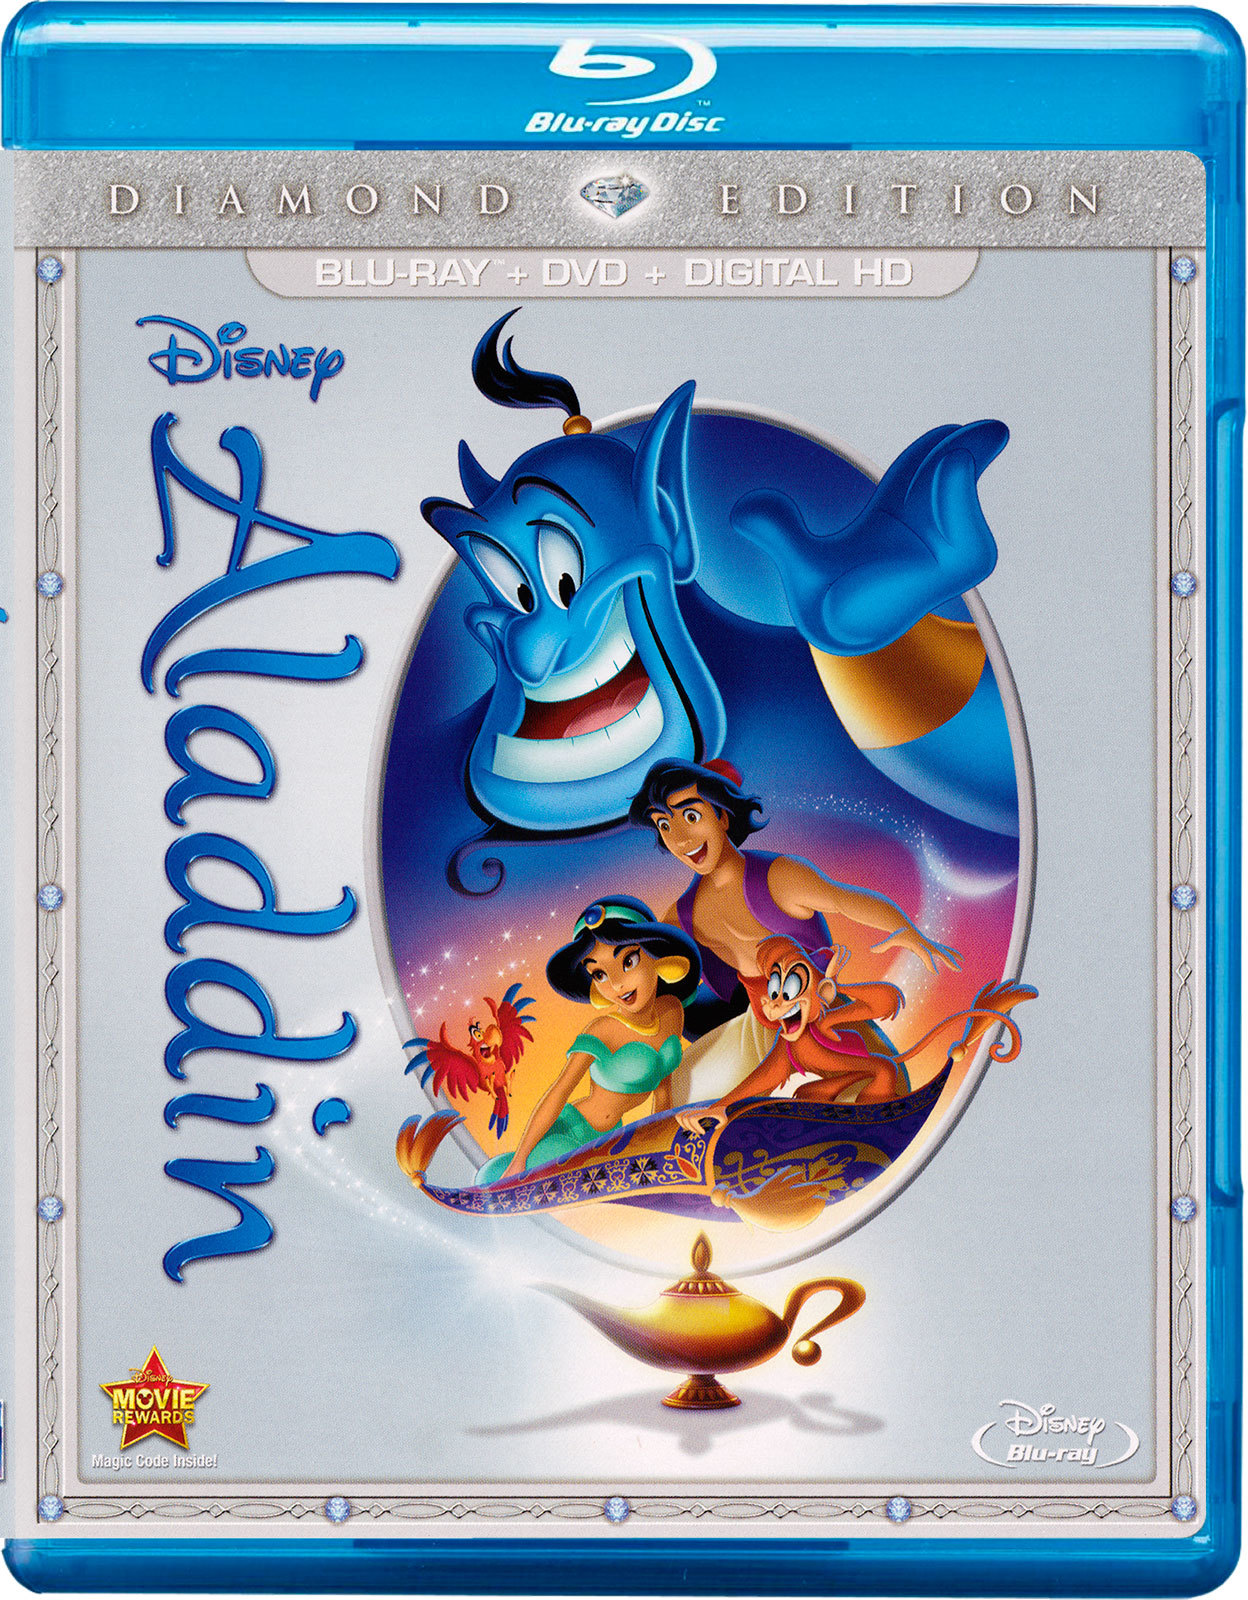 aladdin - Aladdin (Diamond Edition) [1992] Aladdin (Edición Diamante) [1992] [AC3 5.1 + SUP] [Blu Ray-Rip] 757_front